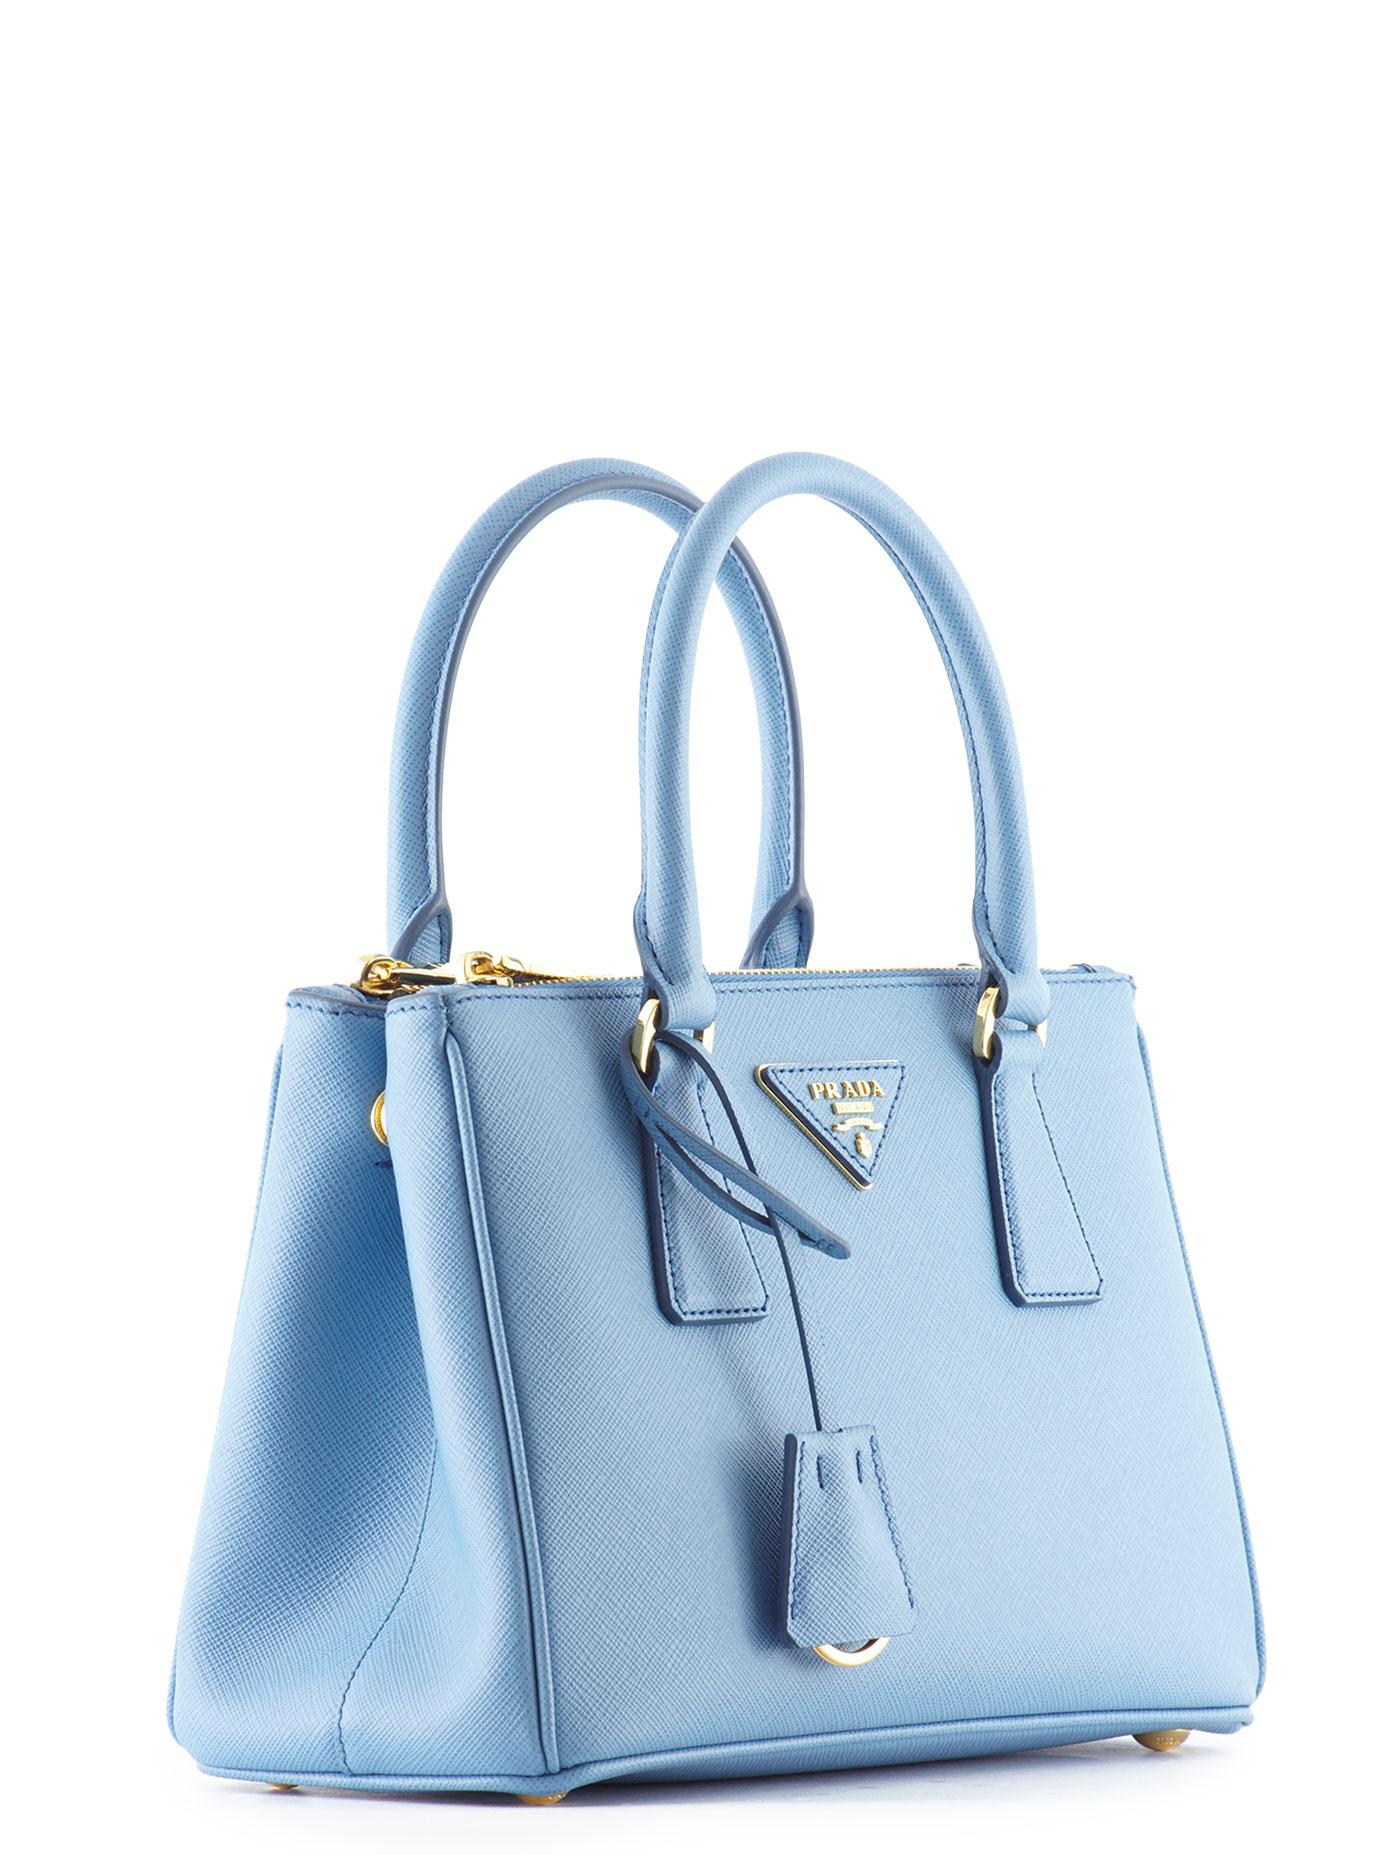 Lyst - Prada Galleria Saffiano Small Leather Shoulder Bag in Blue